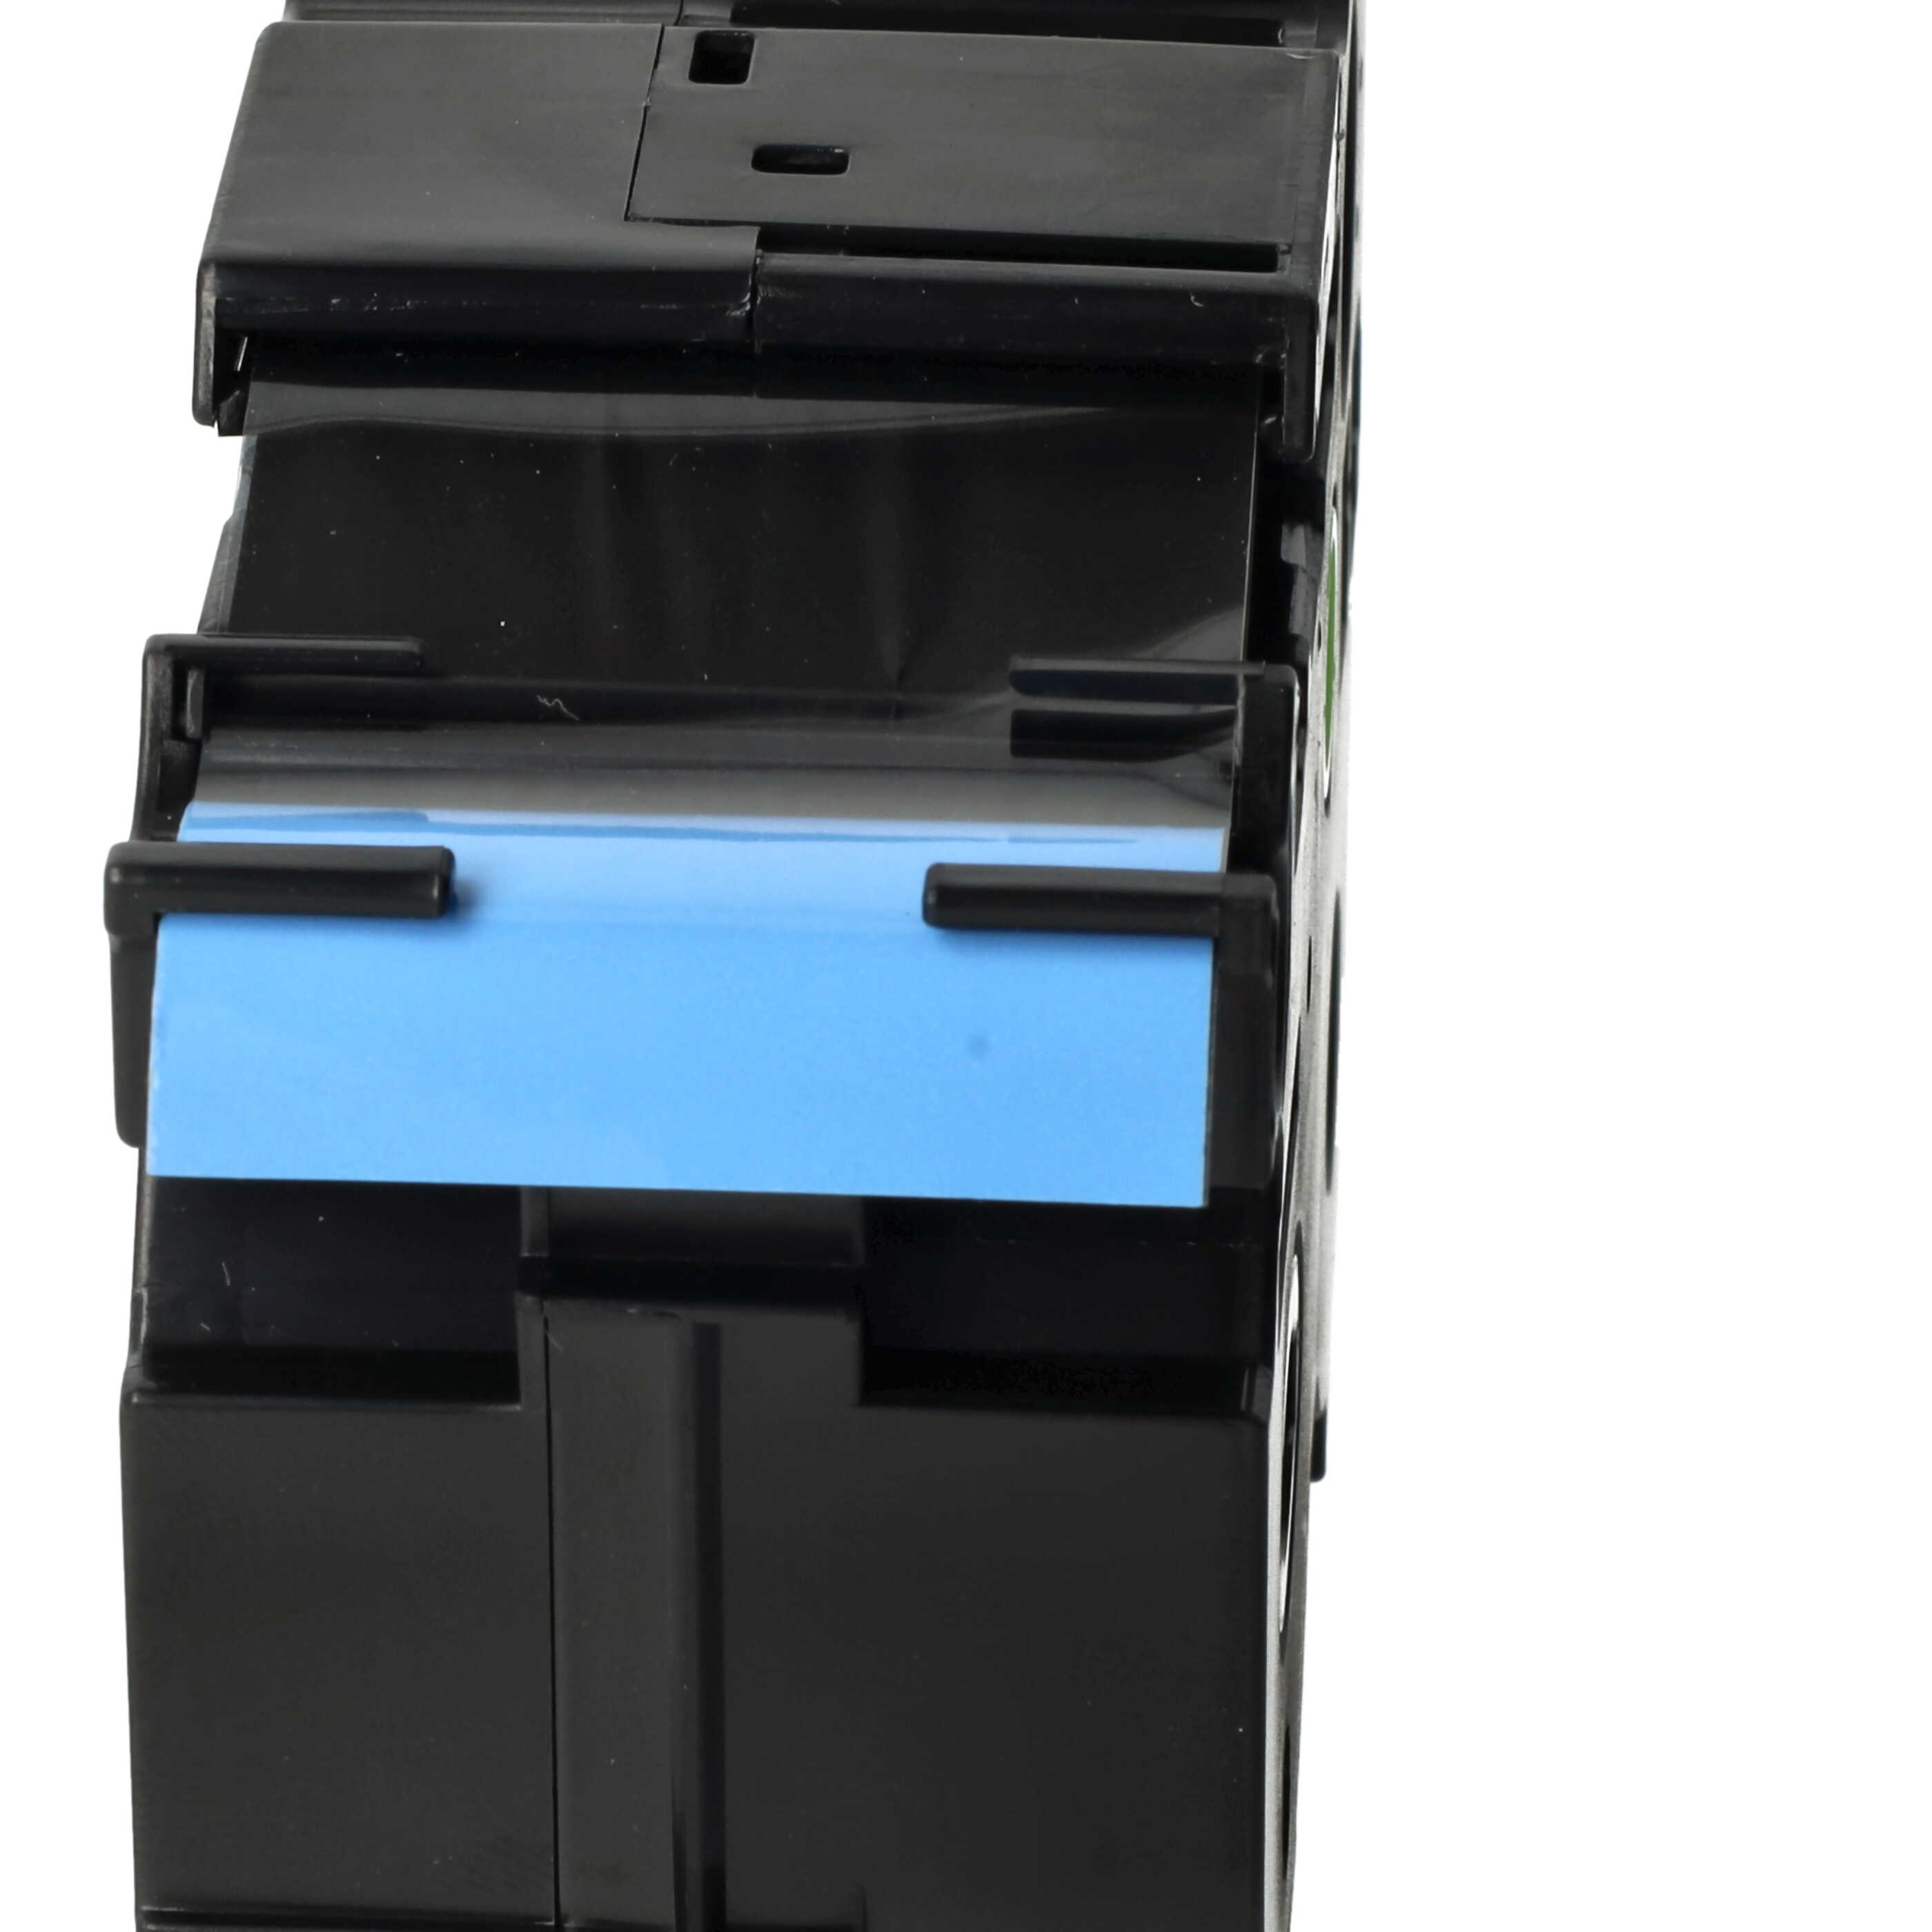 Casete cinta escritura reemplaza Brother AHe-S561, HGE-S561, HGES561 Negro su Azul